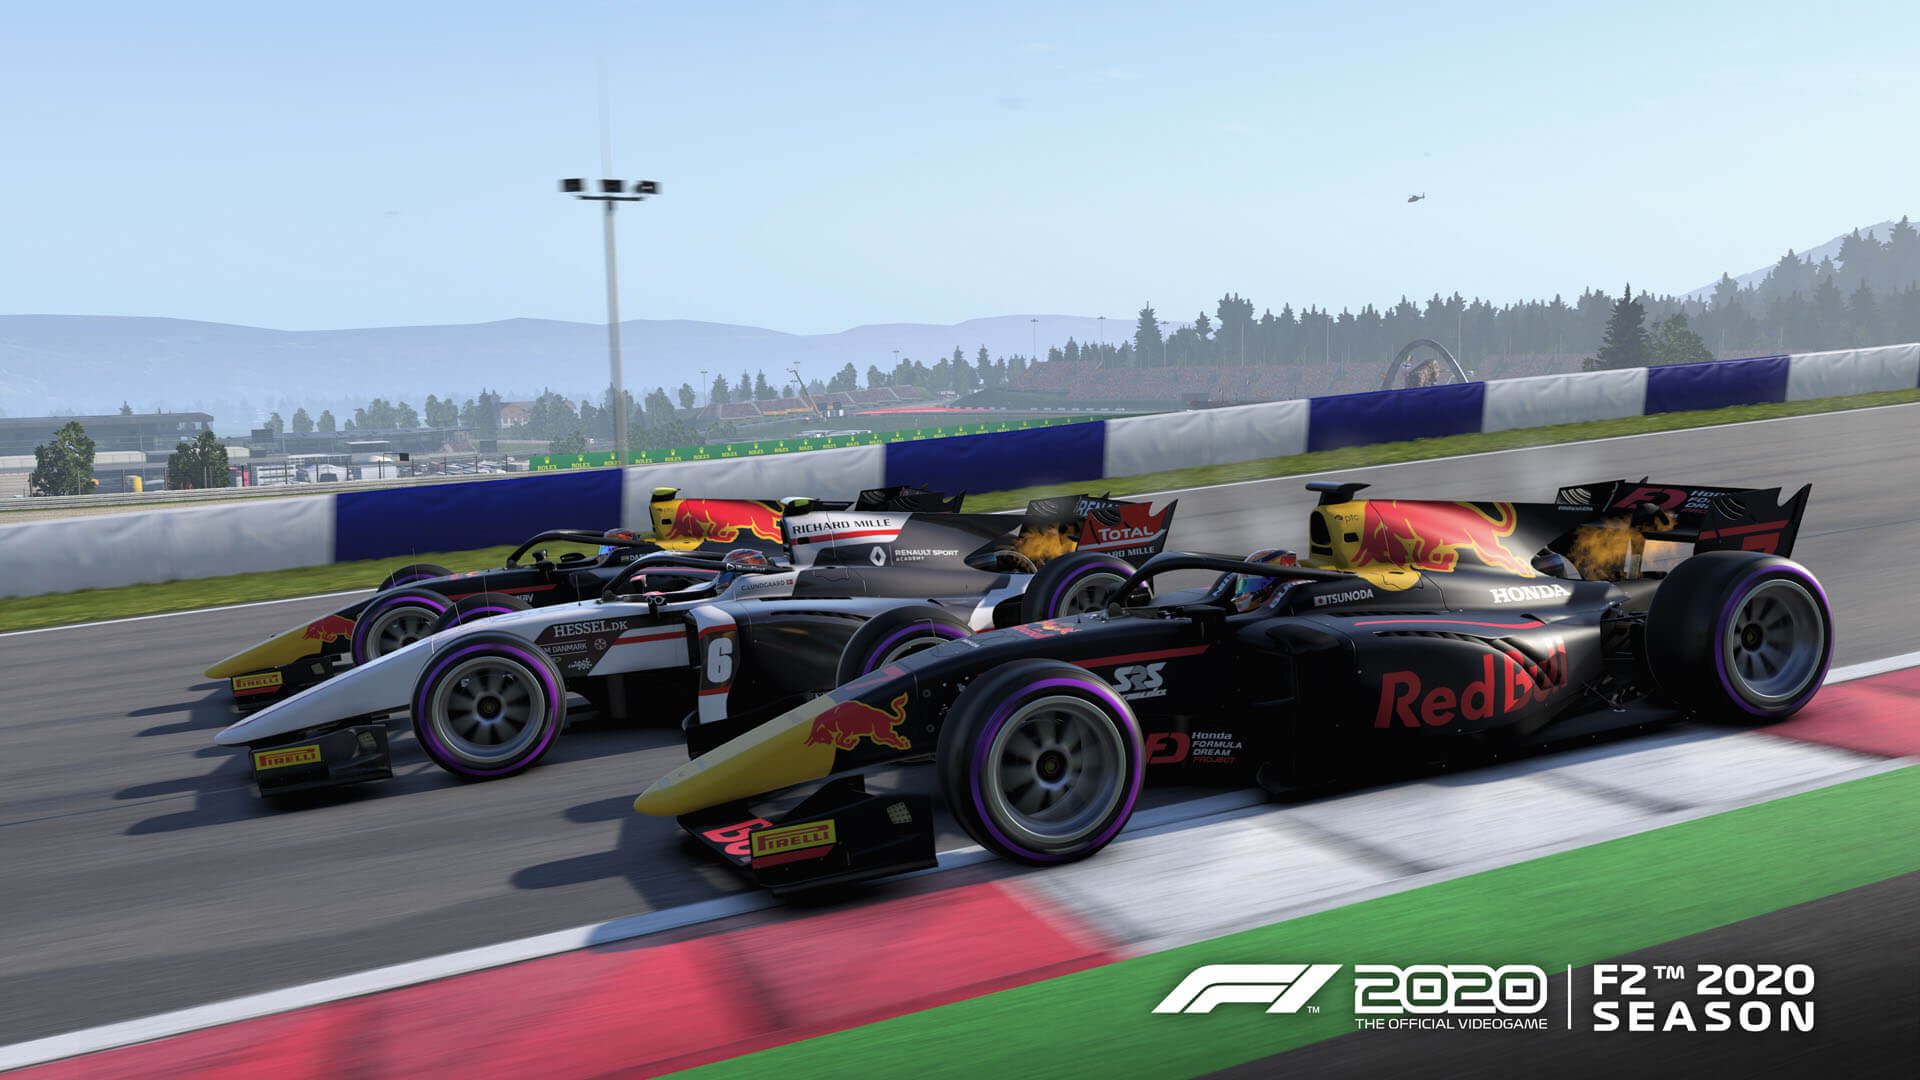 F1 2020 Free Update Adds Complete 2020 Season F2 Grid